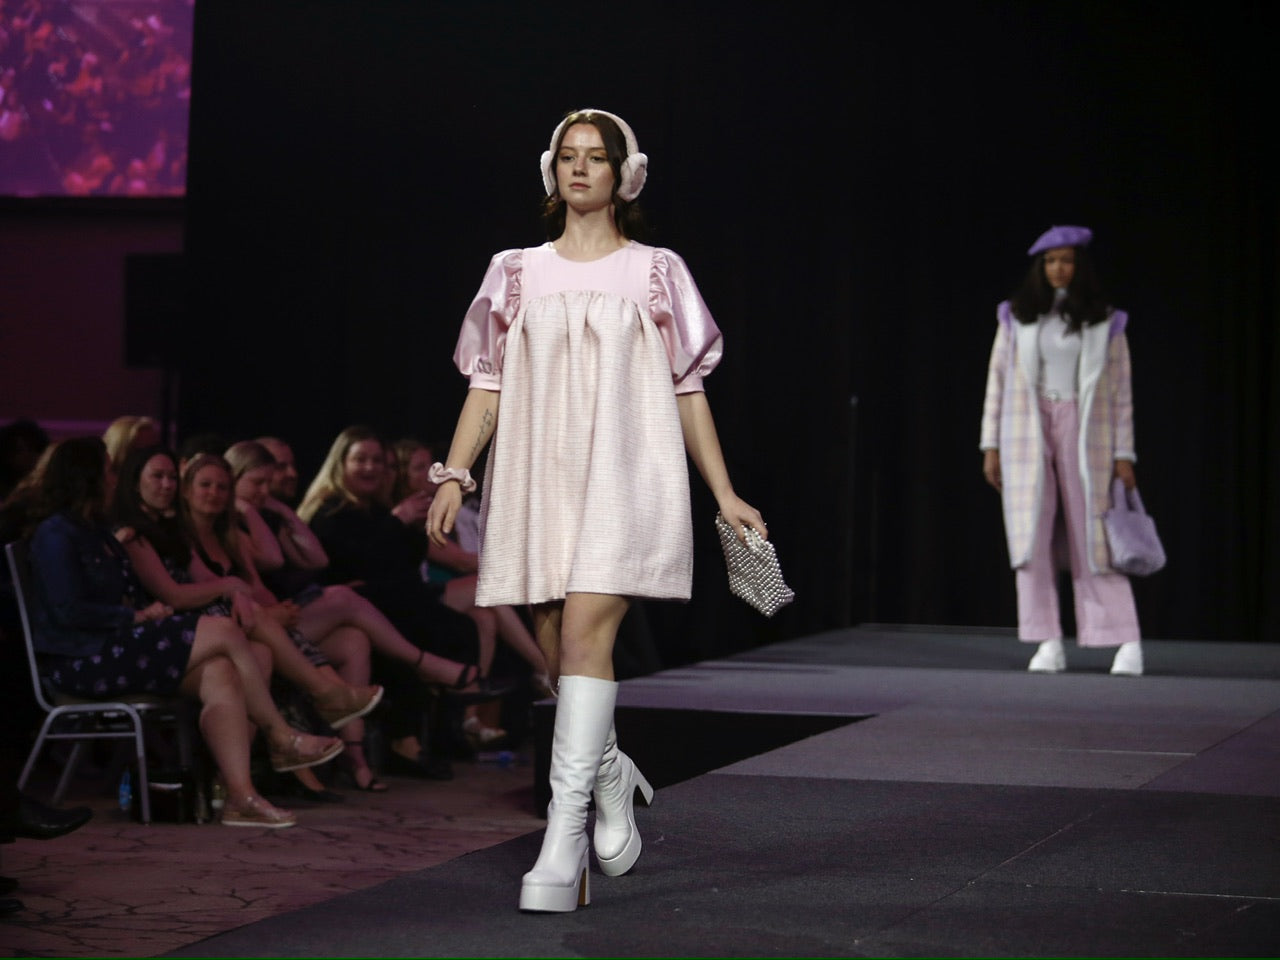 a model wearing a pink puffy mini dress walking down a runway